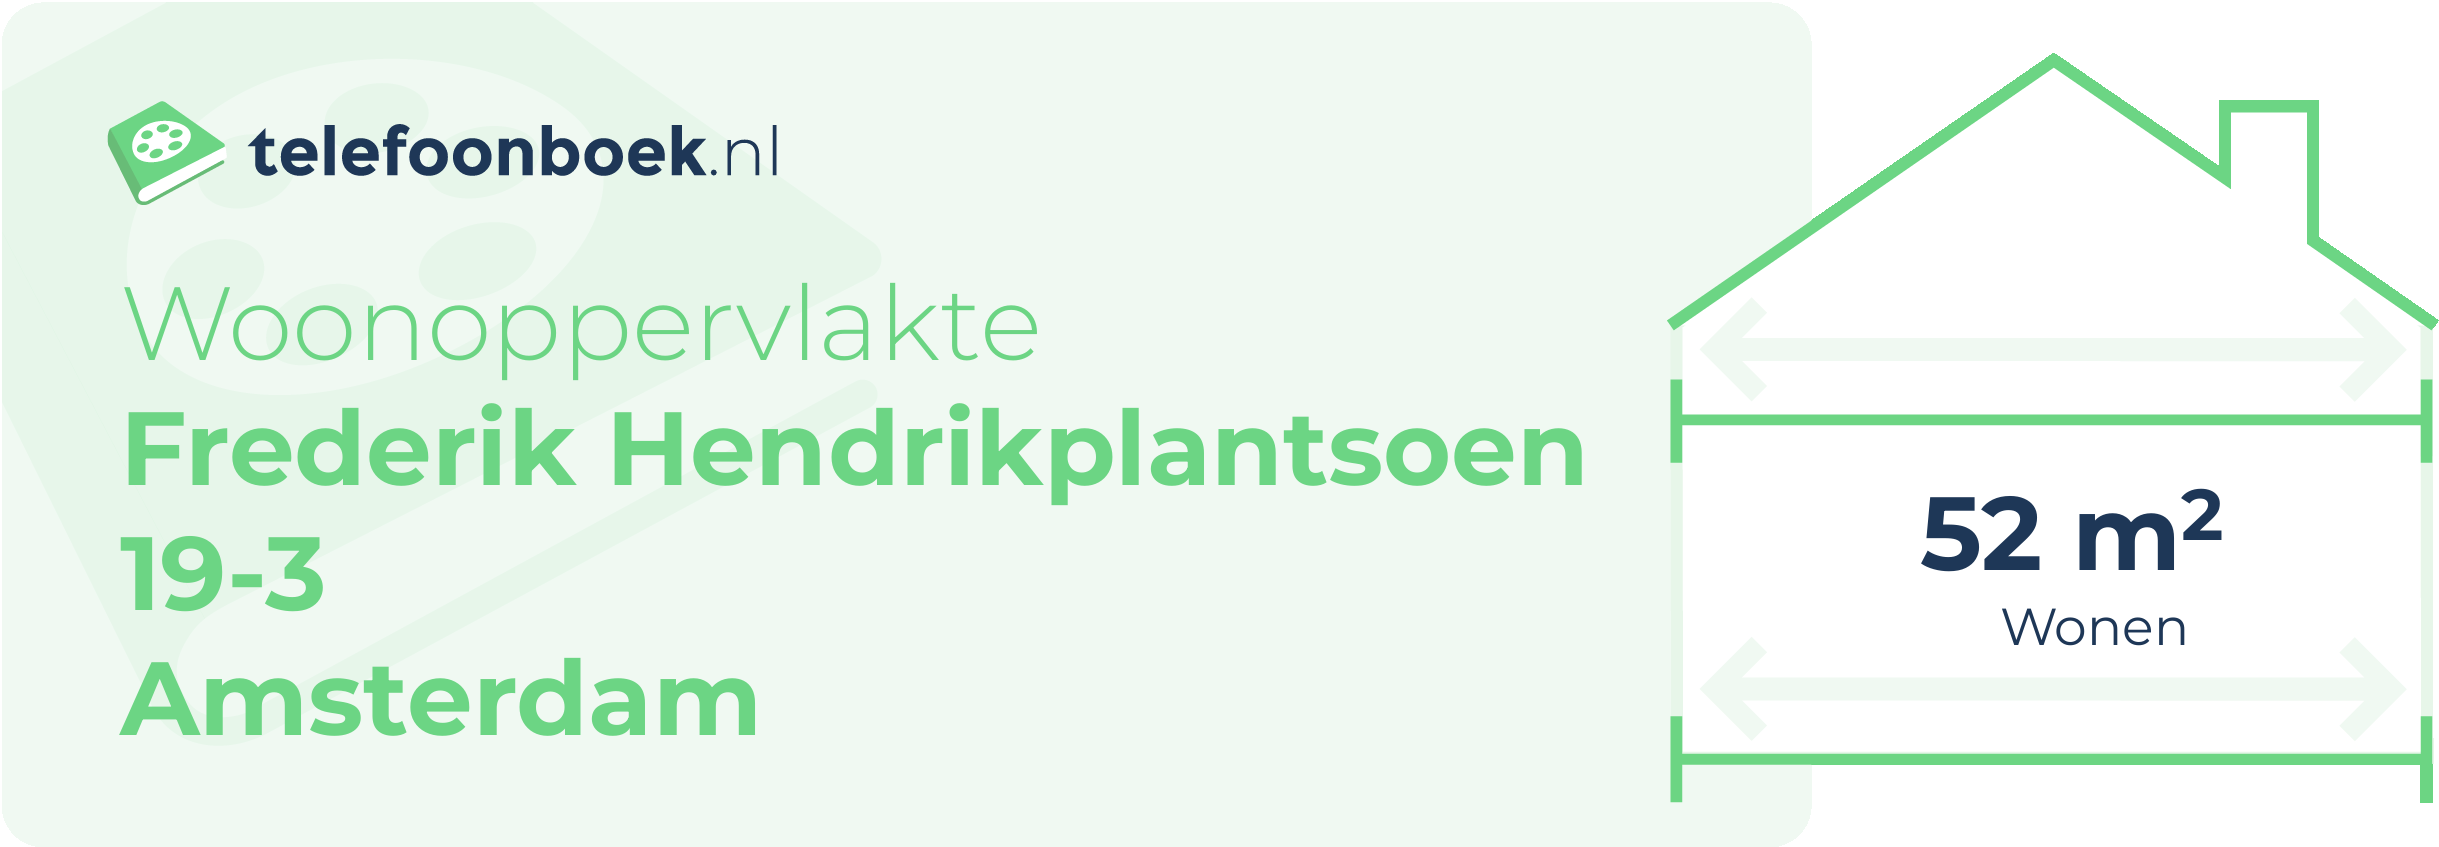 Woonoppervlakte Frederik Hendrikplantsoen 19-3 Amsterdam